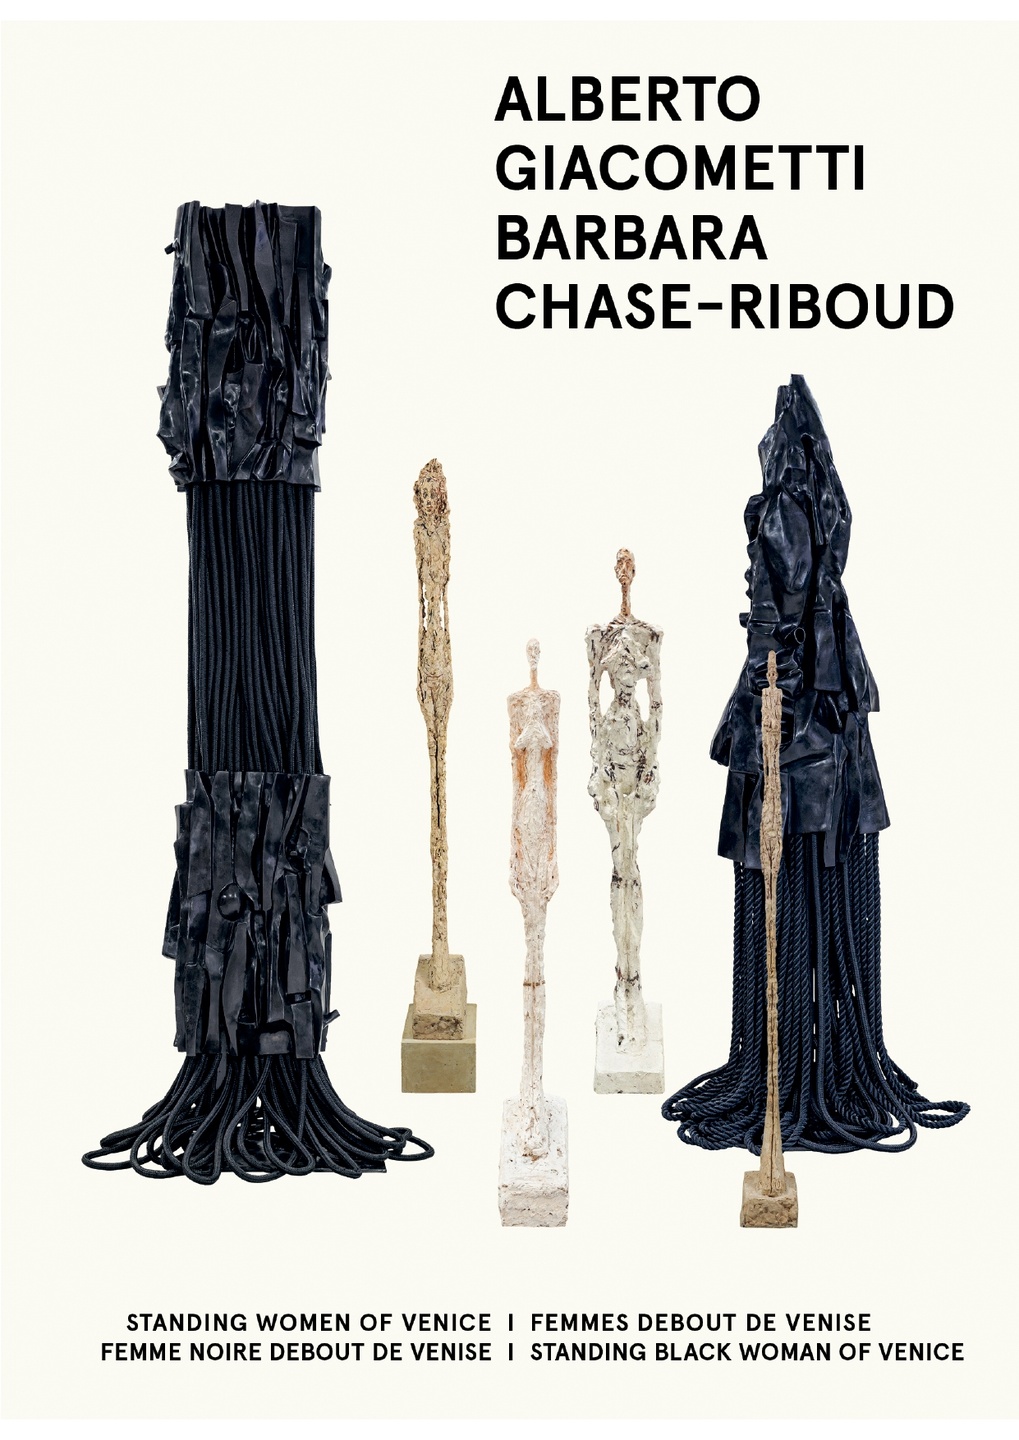 Fondation Giacometti -  Aberto Giacometti / Barbara Chase-Riboud